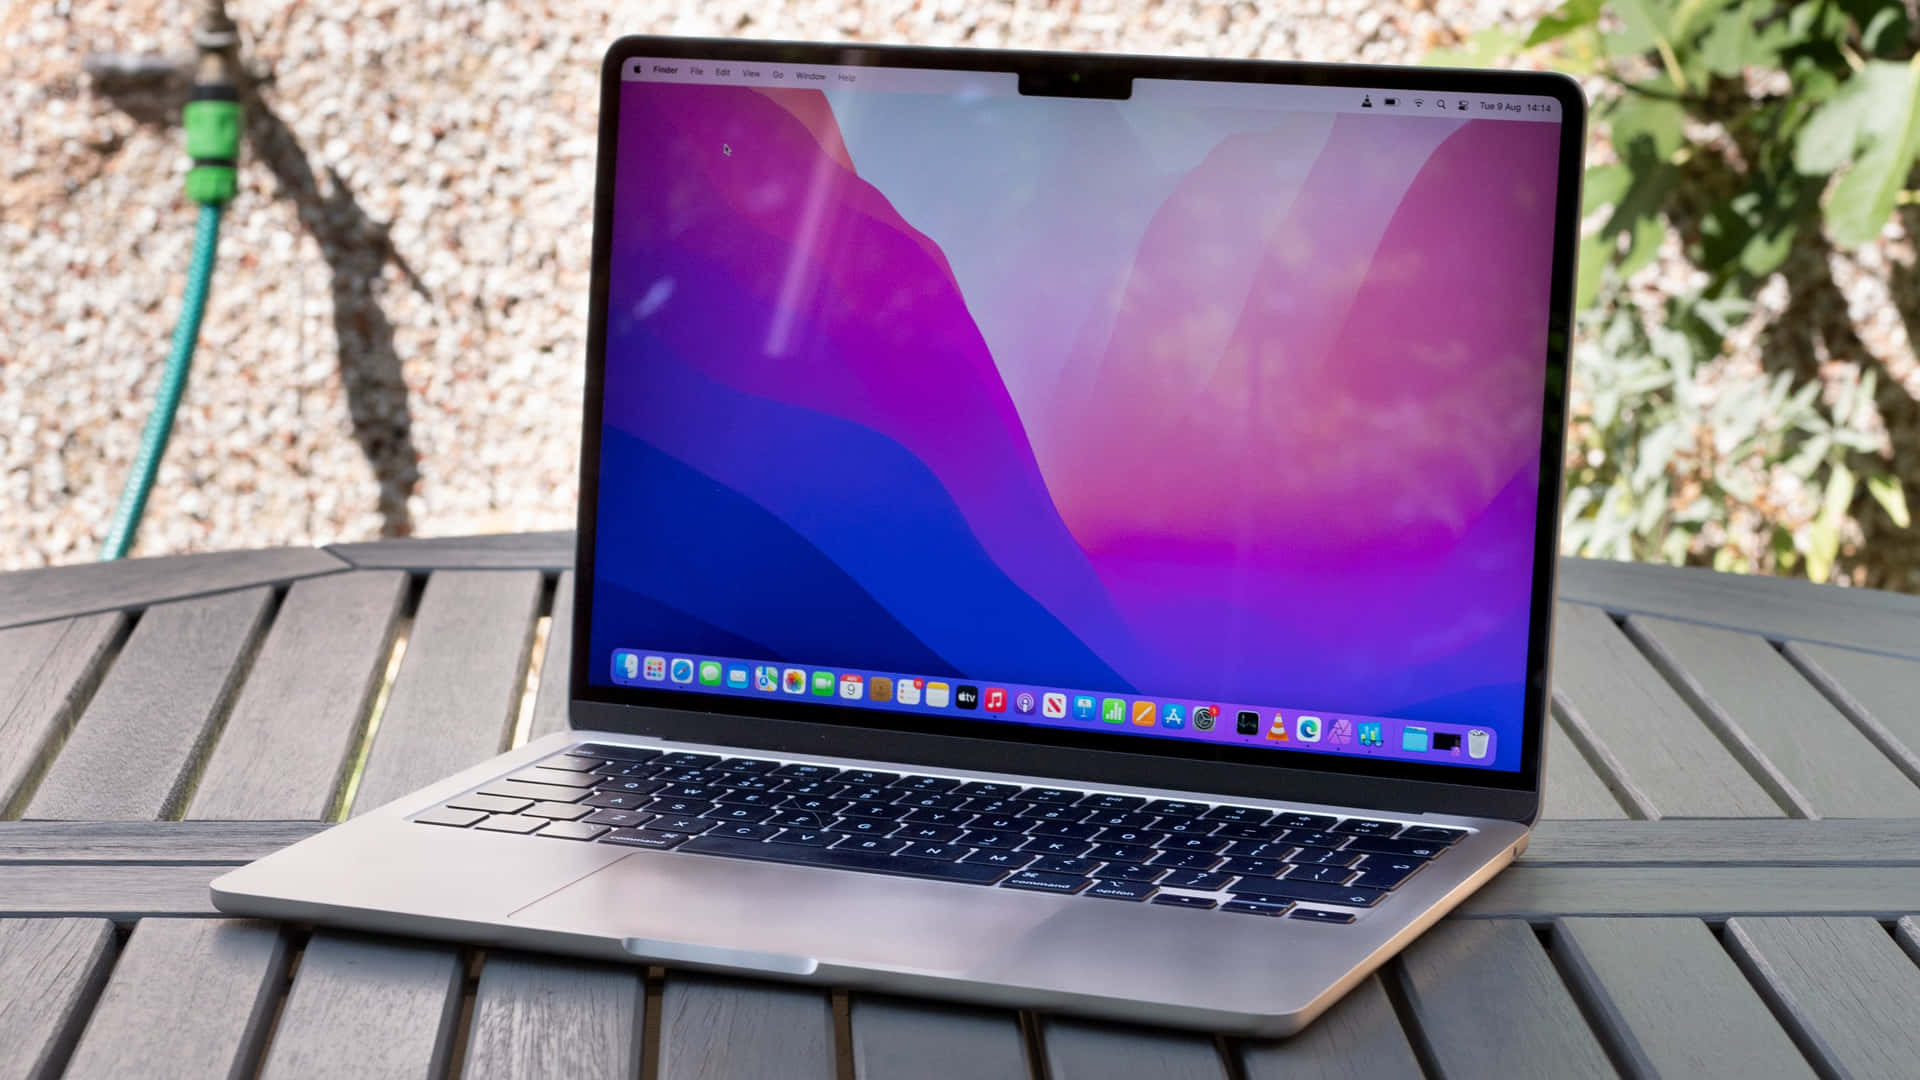 Enjoy using the MacBook with its stunning Retina display